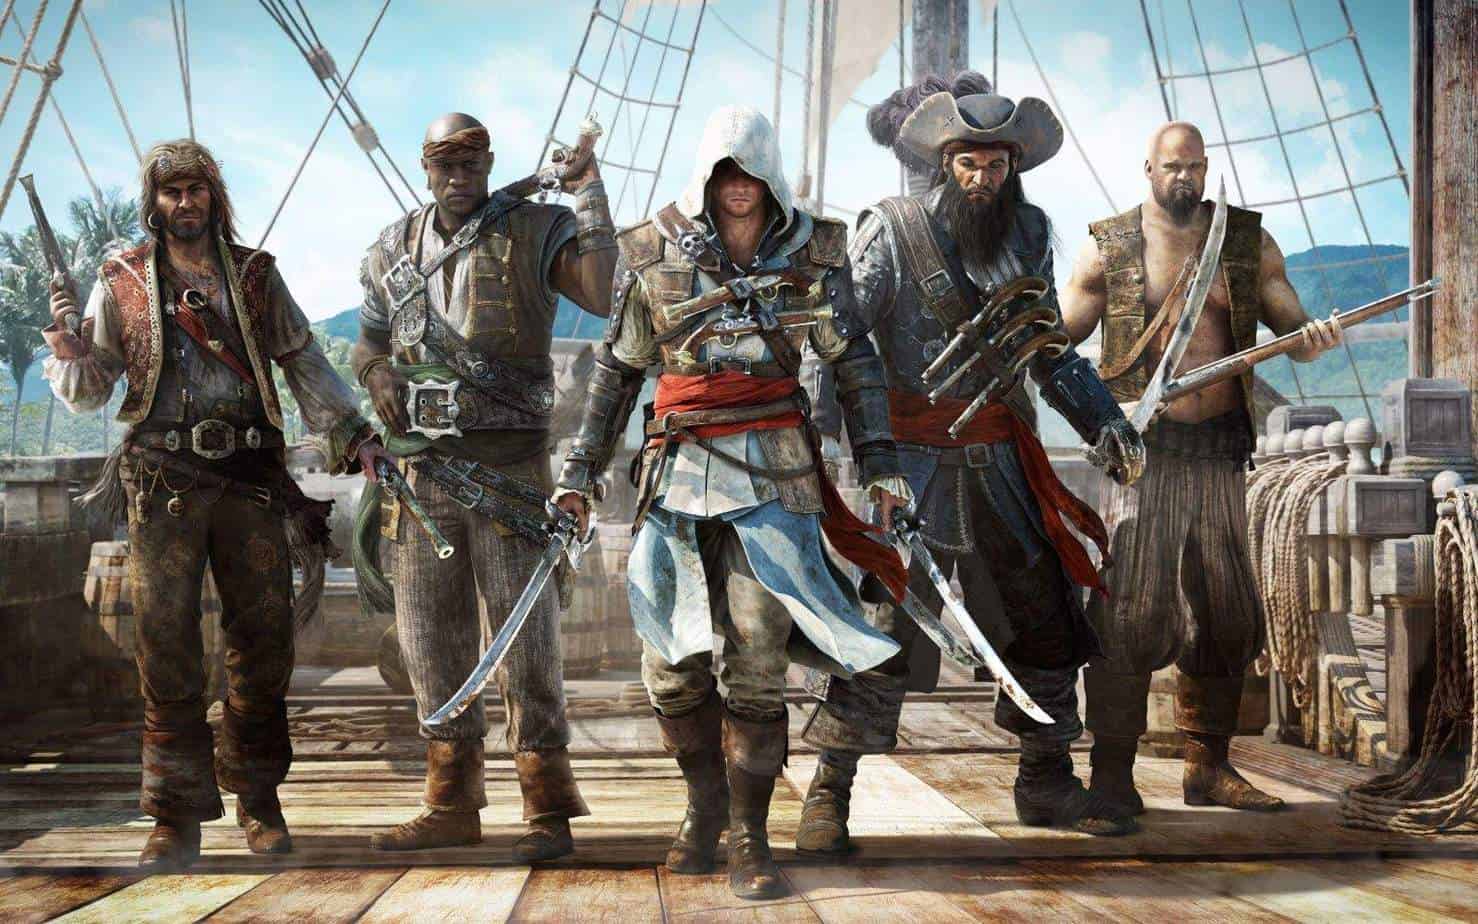 assassins-creed-pirates